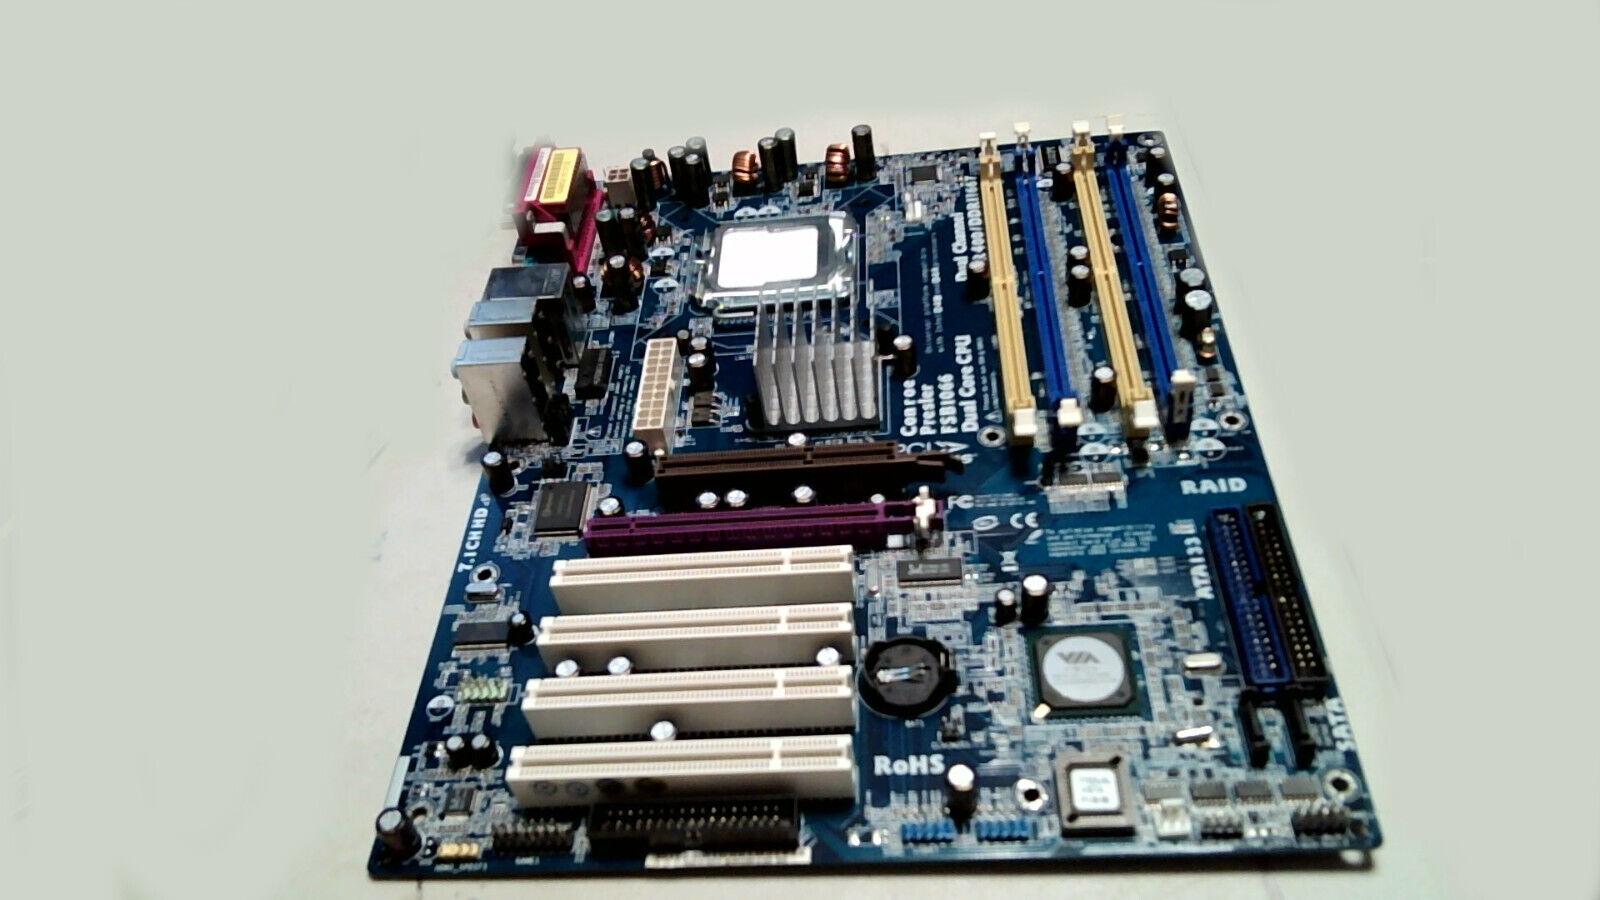 ** PARTS ONLY ** ASRock 775Dual-VSTA Hybrid Socket 775 AGP PCI-E ATX Motherboard